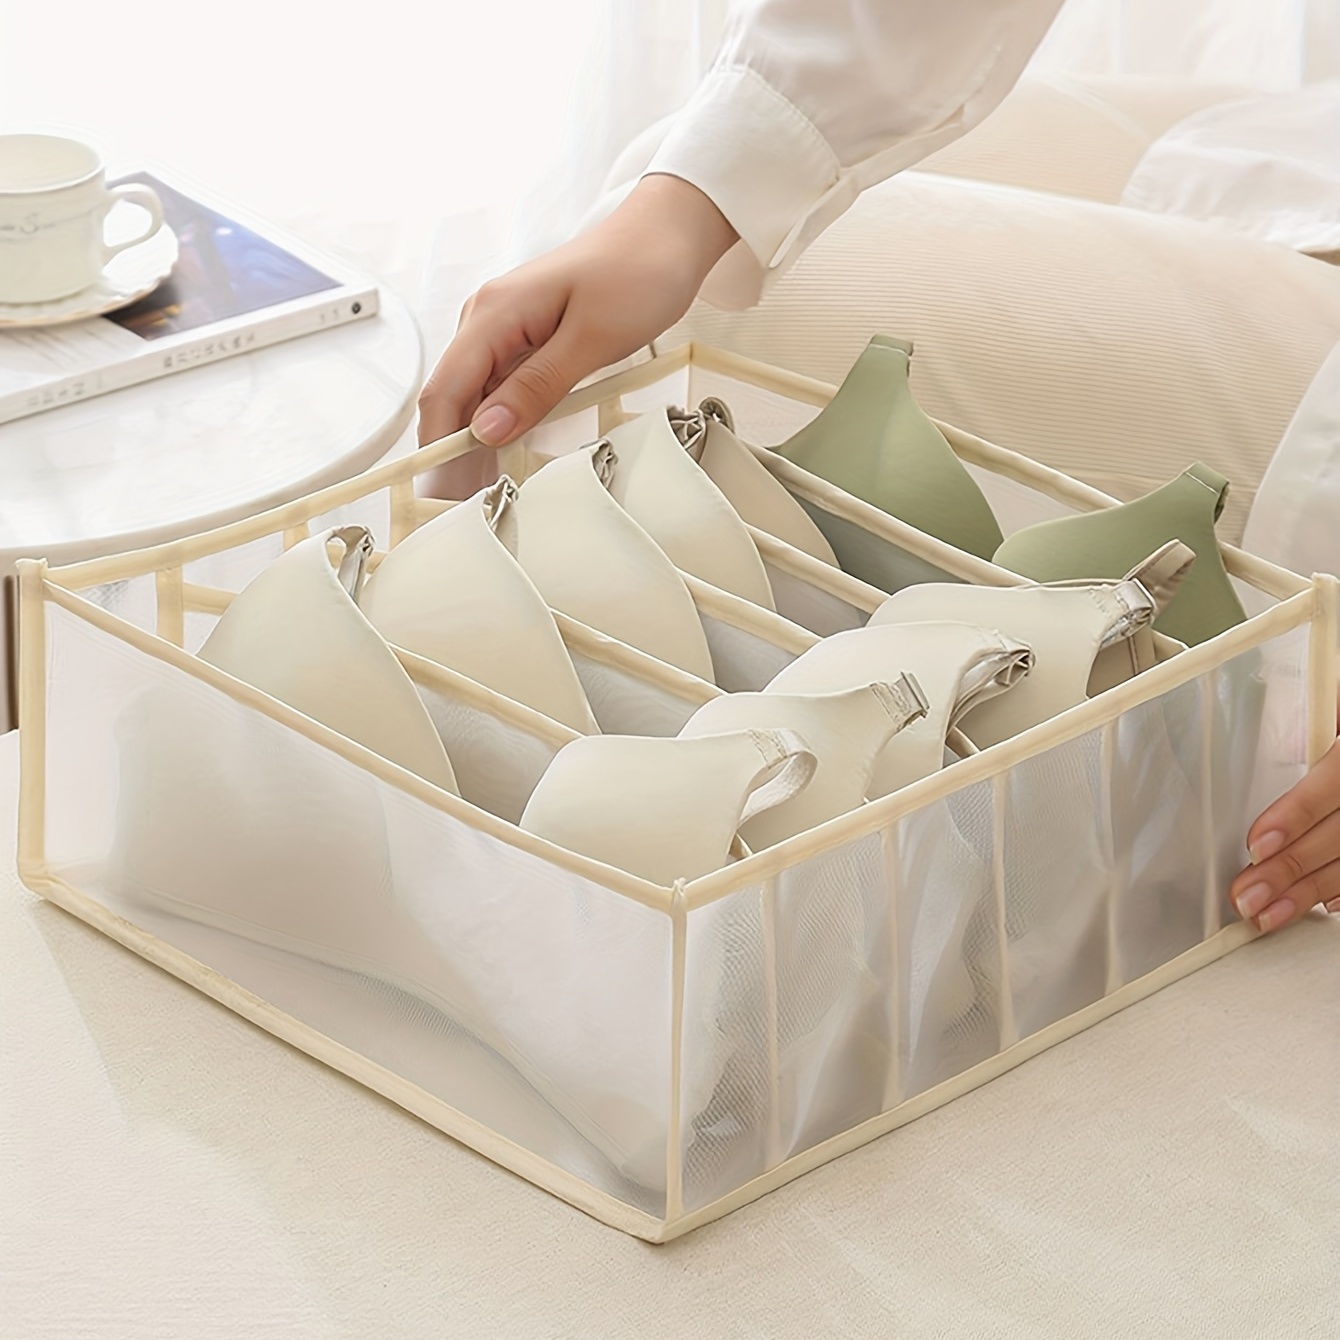  Foldable Underwear Storage Box, 3Pcs Set Organizer Drawer  Divider Compartment, Nylon Divider Bra Socks Panty Storage Bag (Gray) :  Home & Kitchen